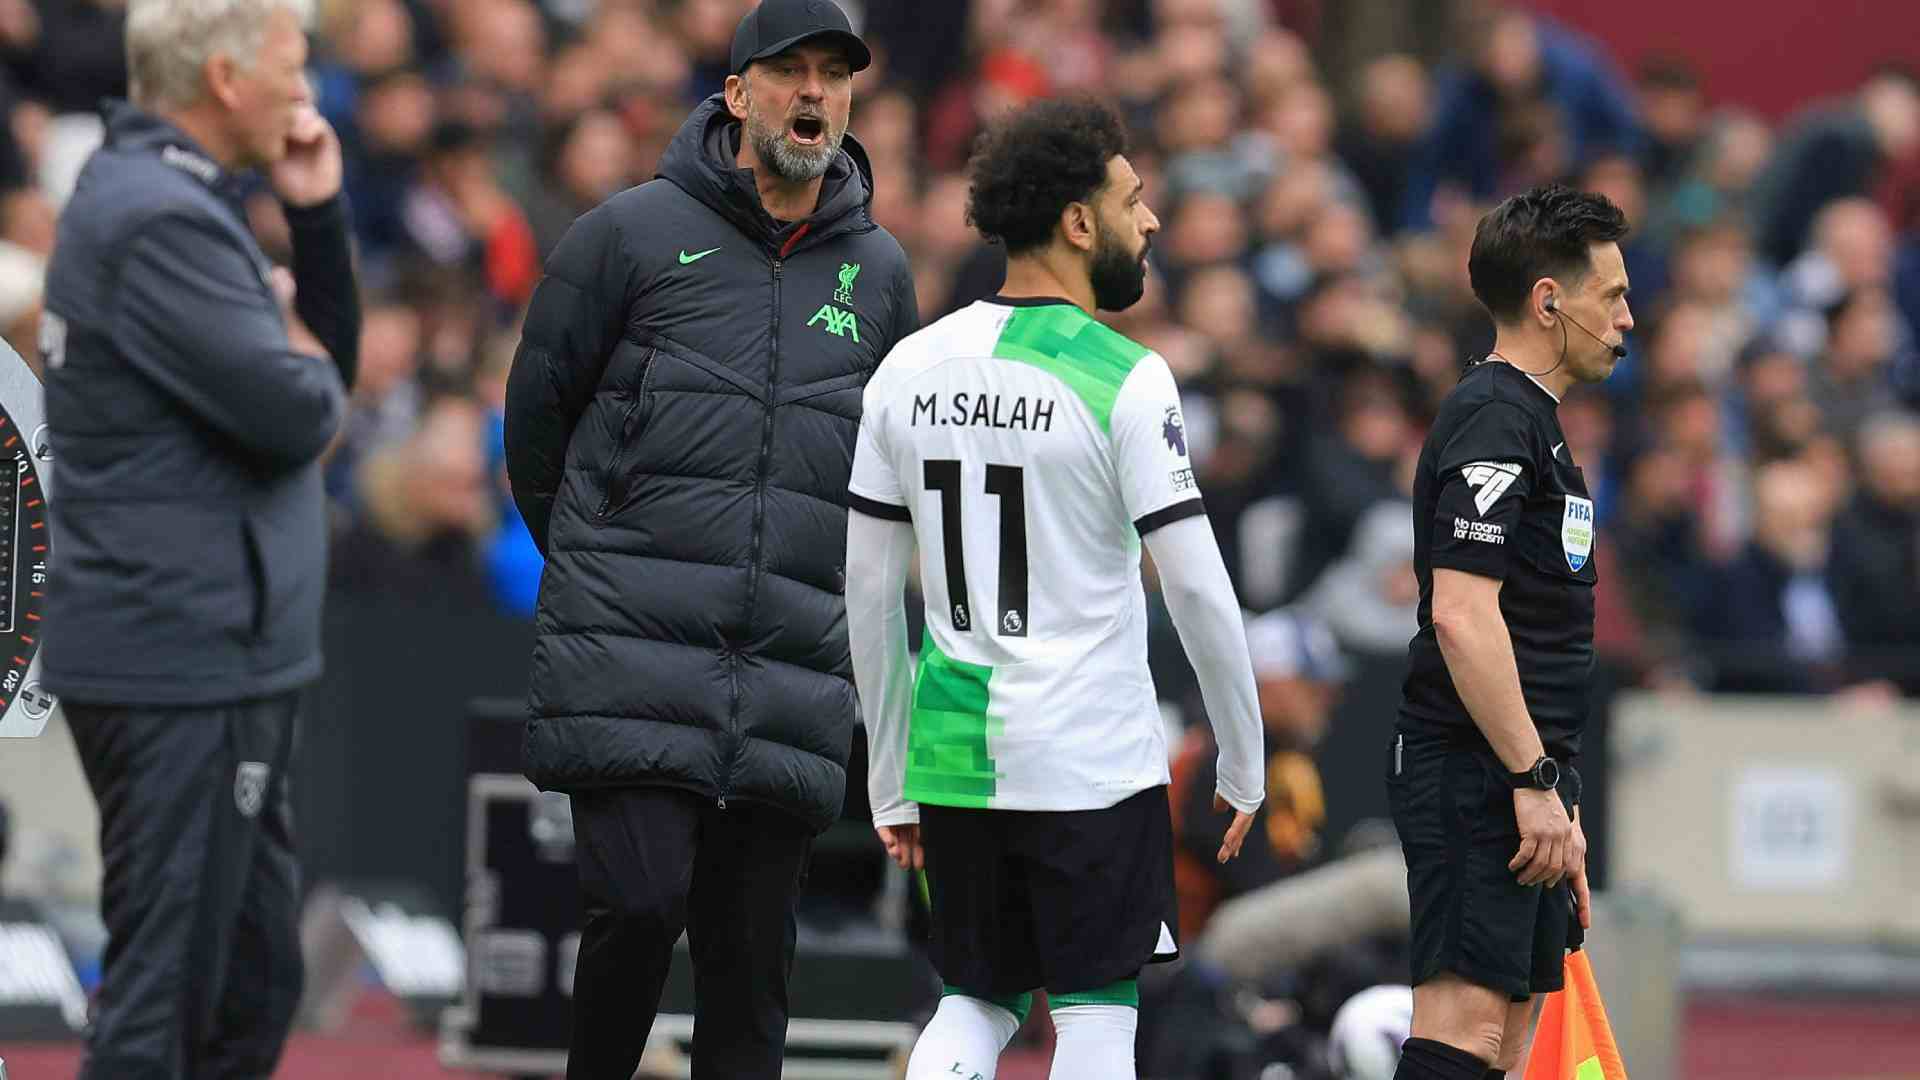 Liverpool, nervi tesi tra Salah e Klopp a bordo campo (VIDEO)